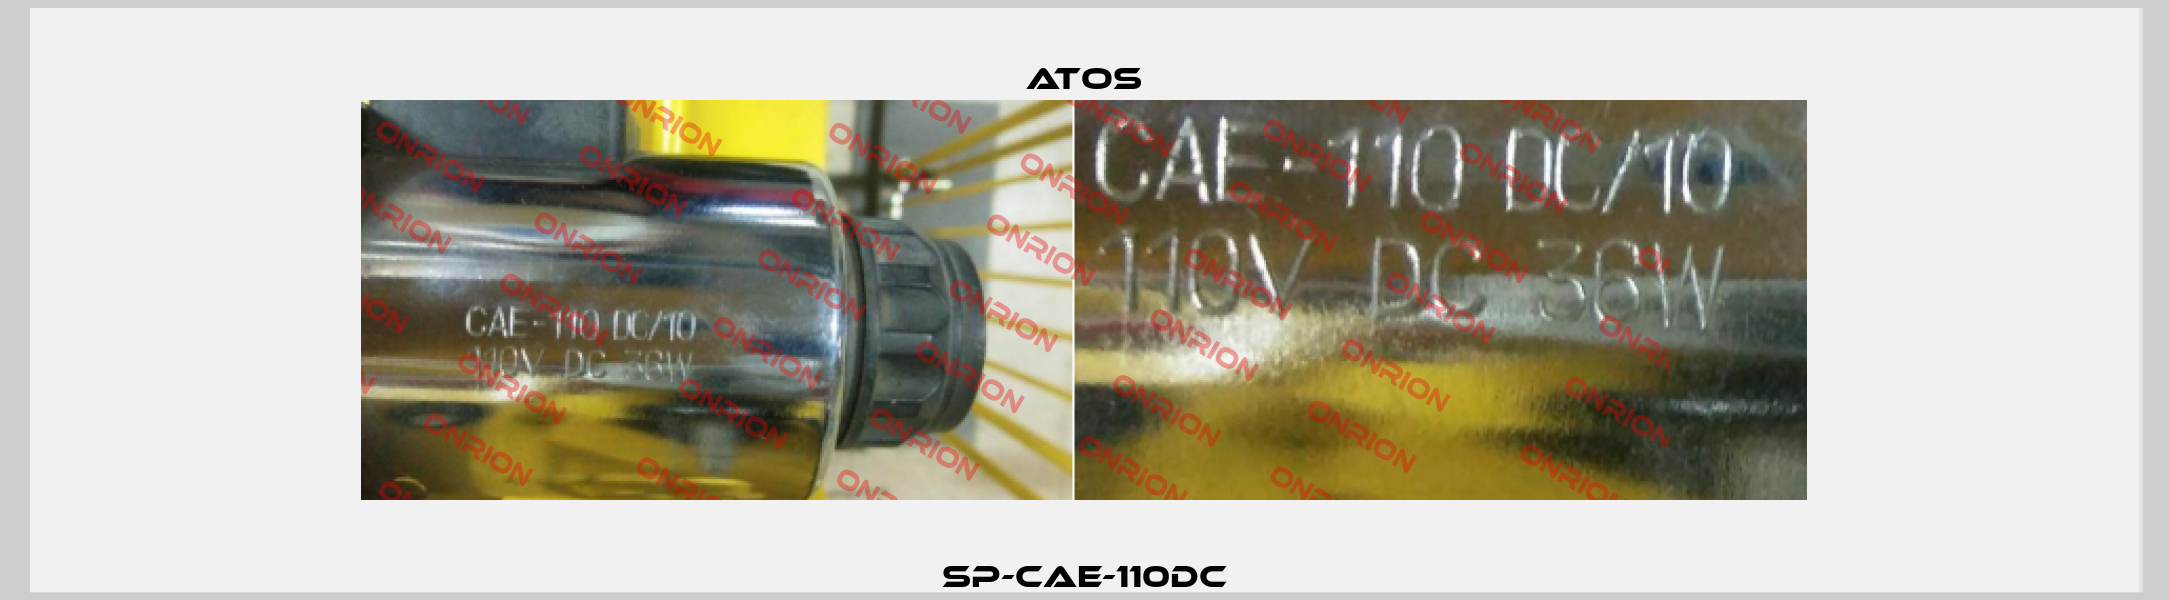 SP-CAE-110DC Atos